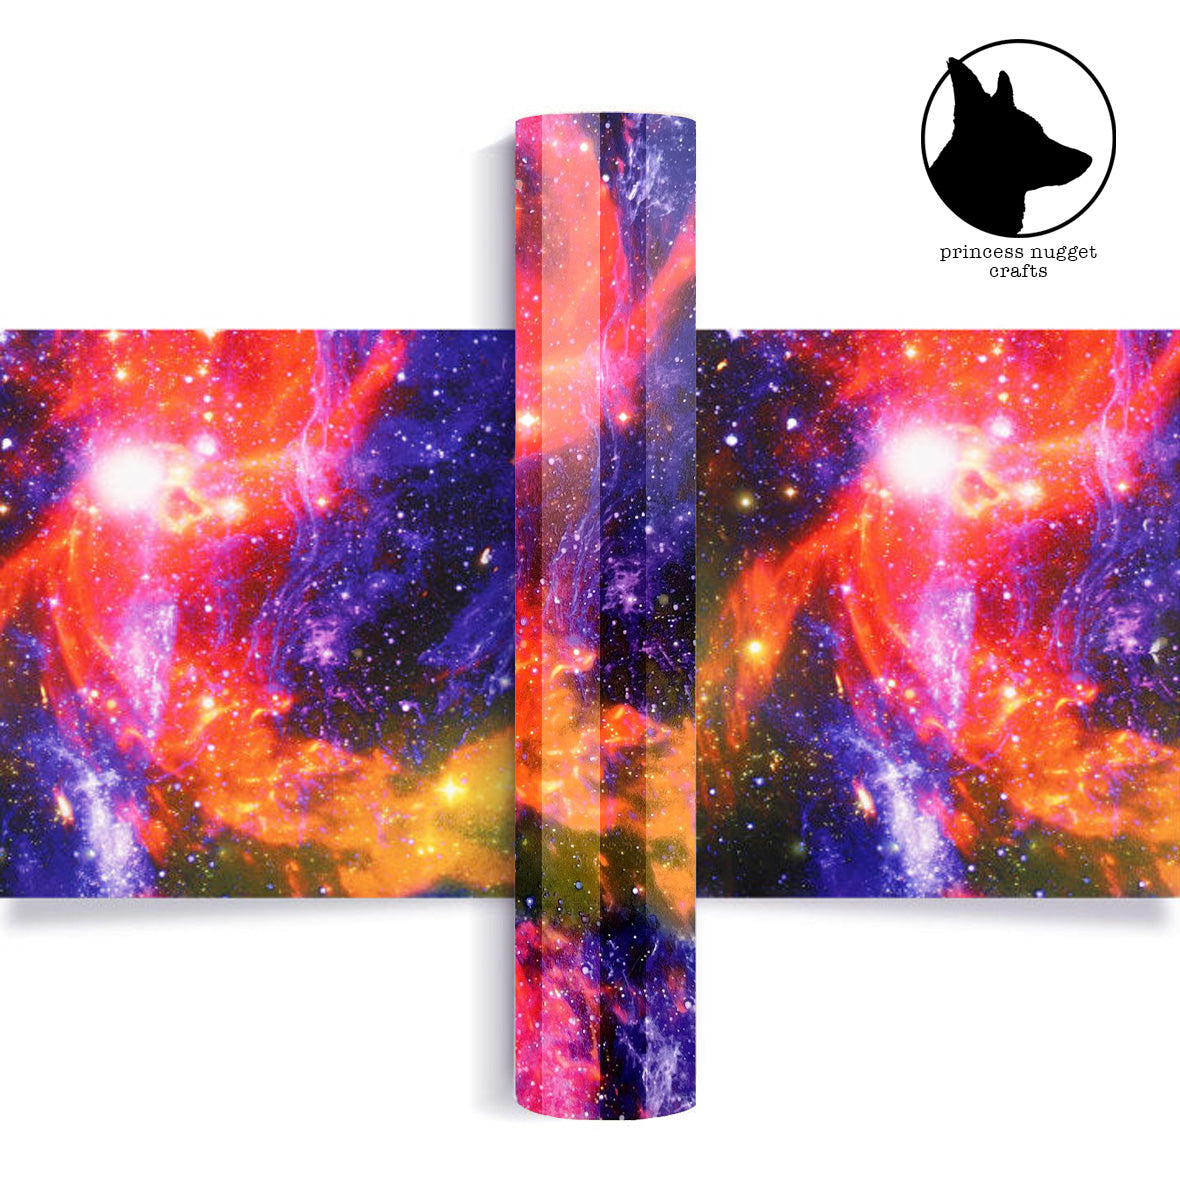 FLEX Galaxy Nebula Orange - Princess Nugget crafts